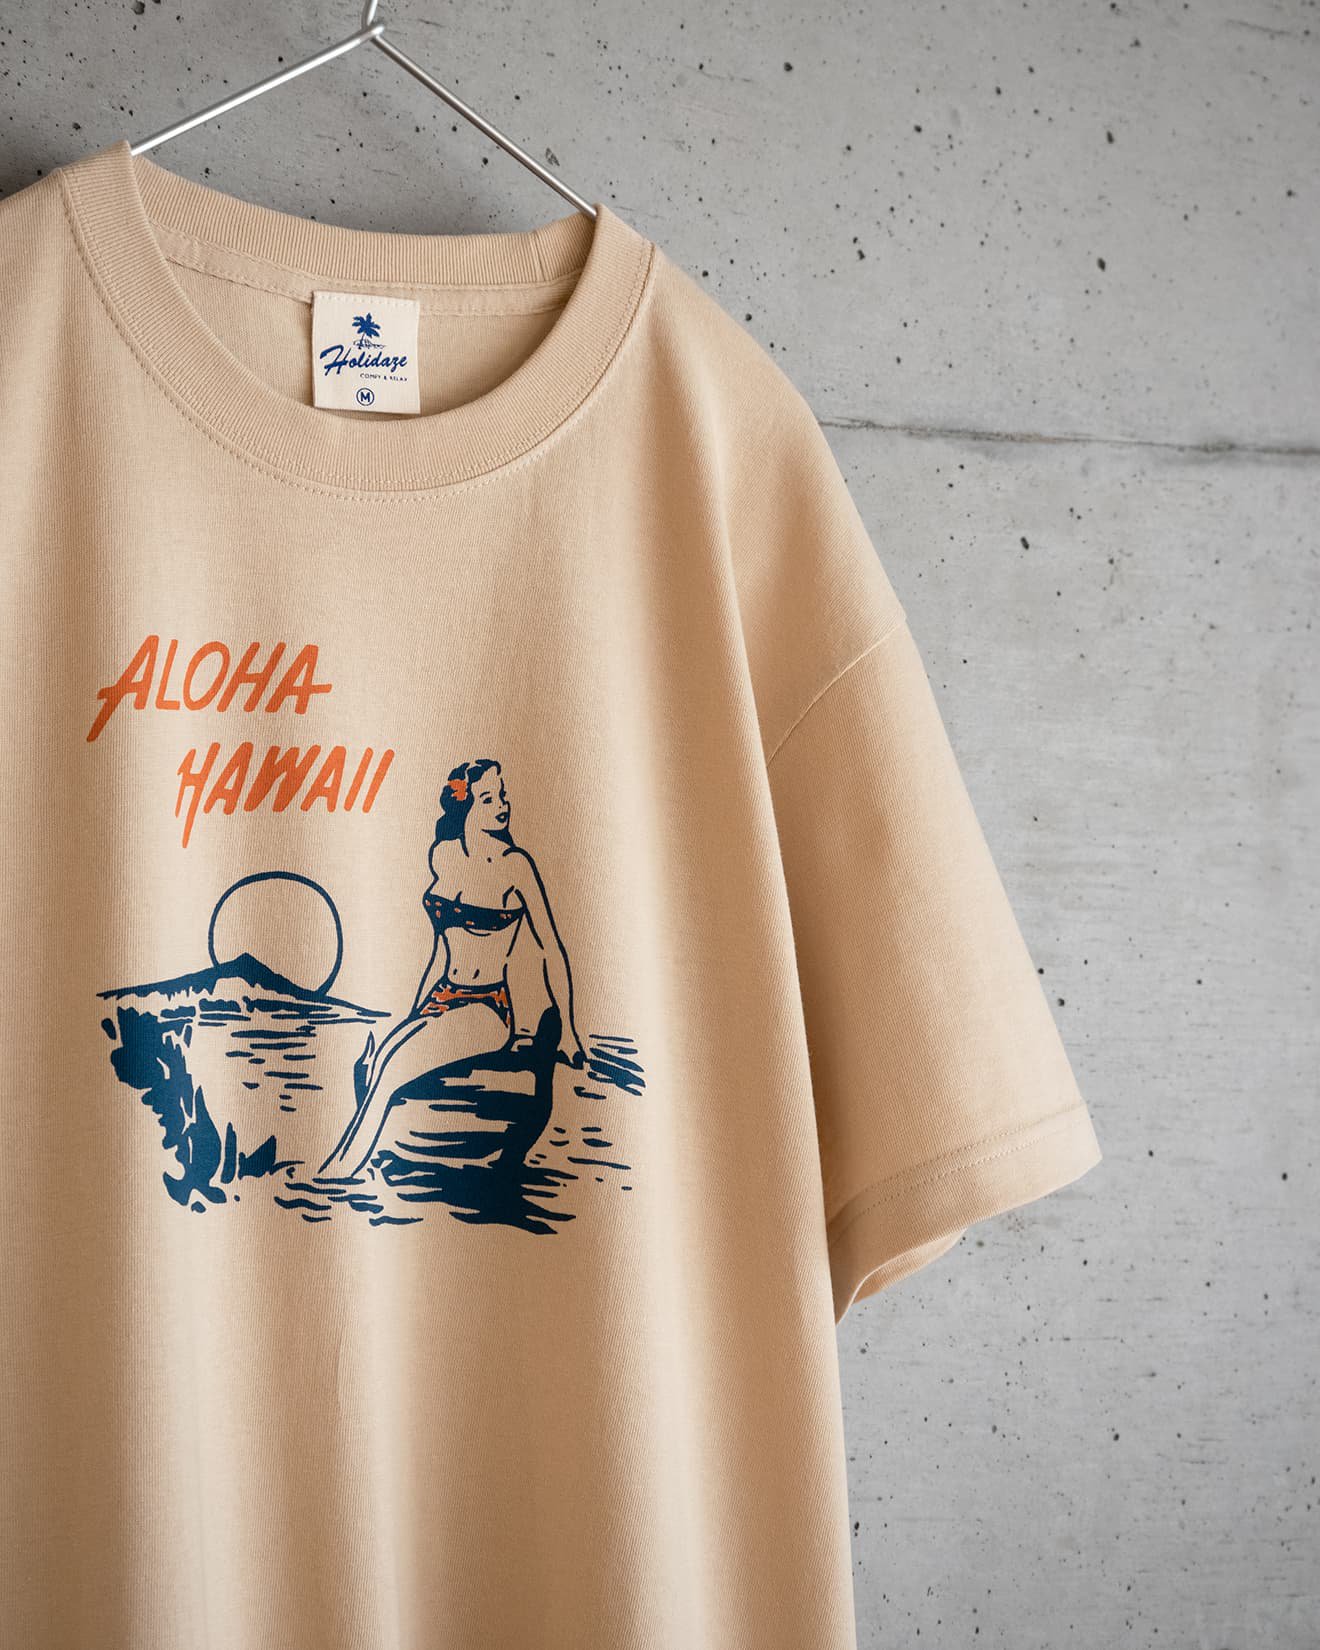 cootie aloha shirts kj着百合 激レア 値下げ可能 - www